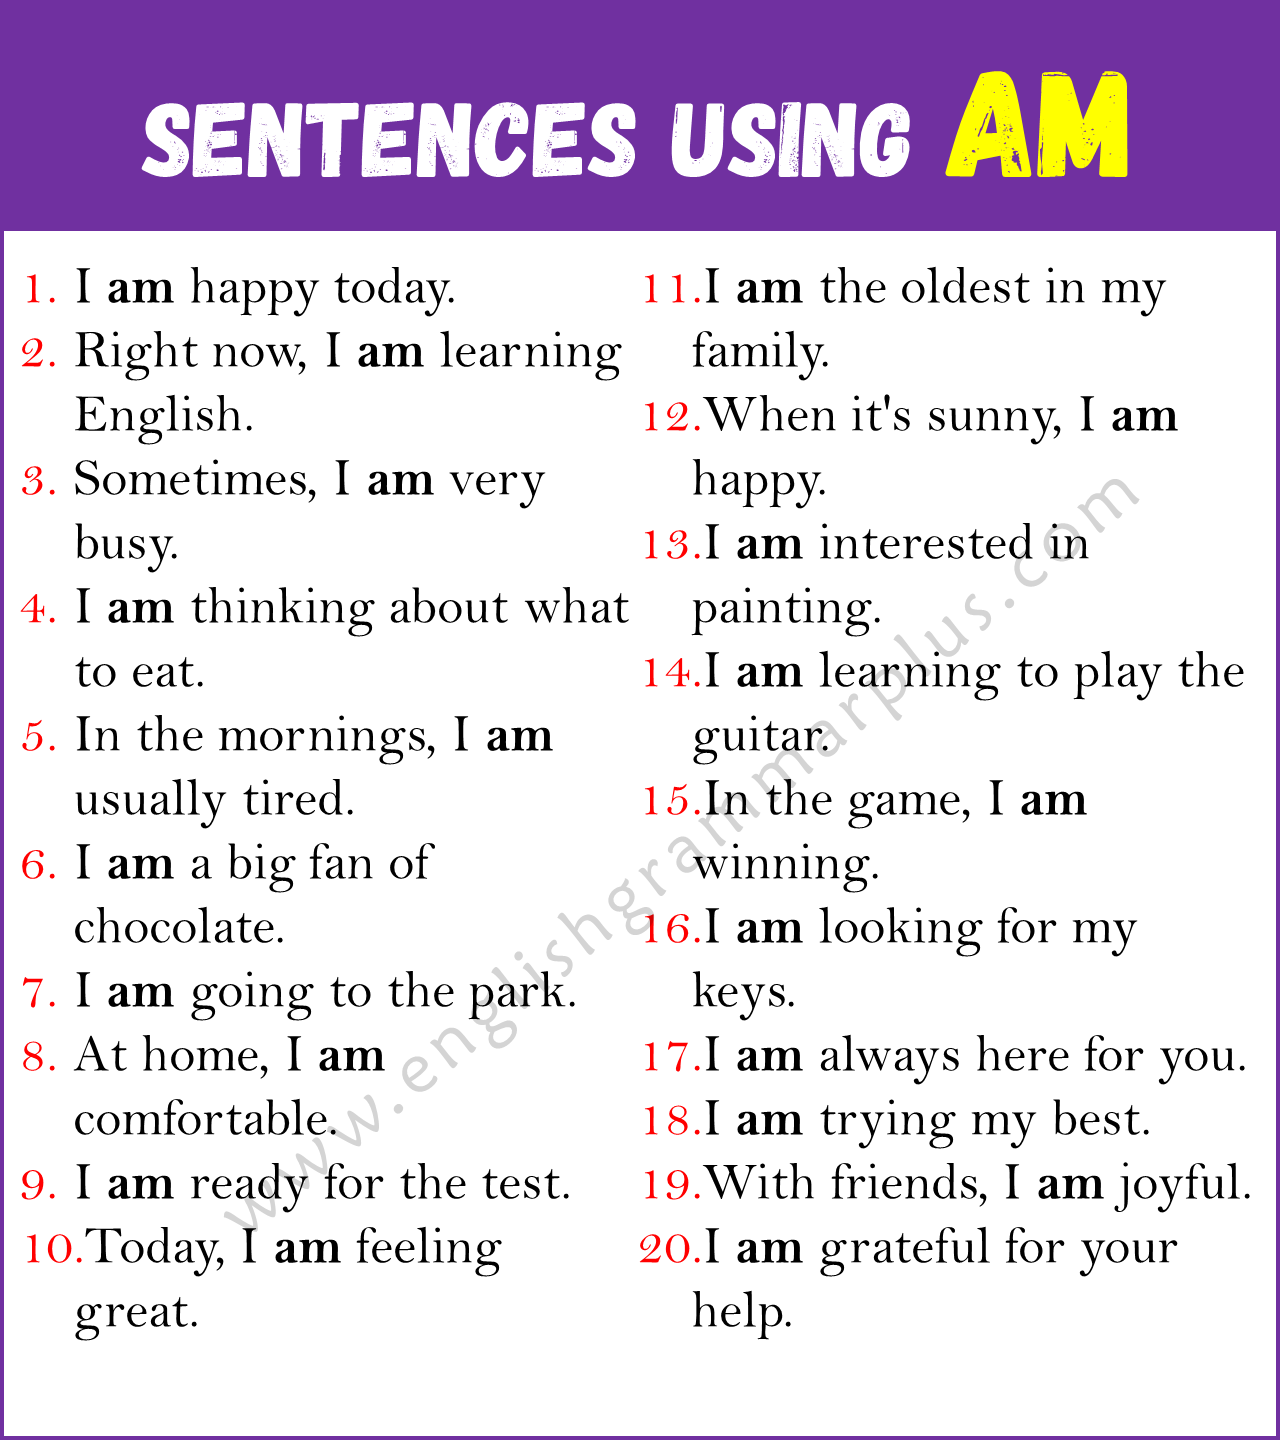 Sentences Using AM